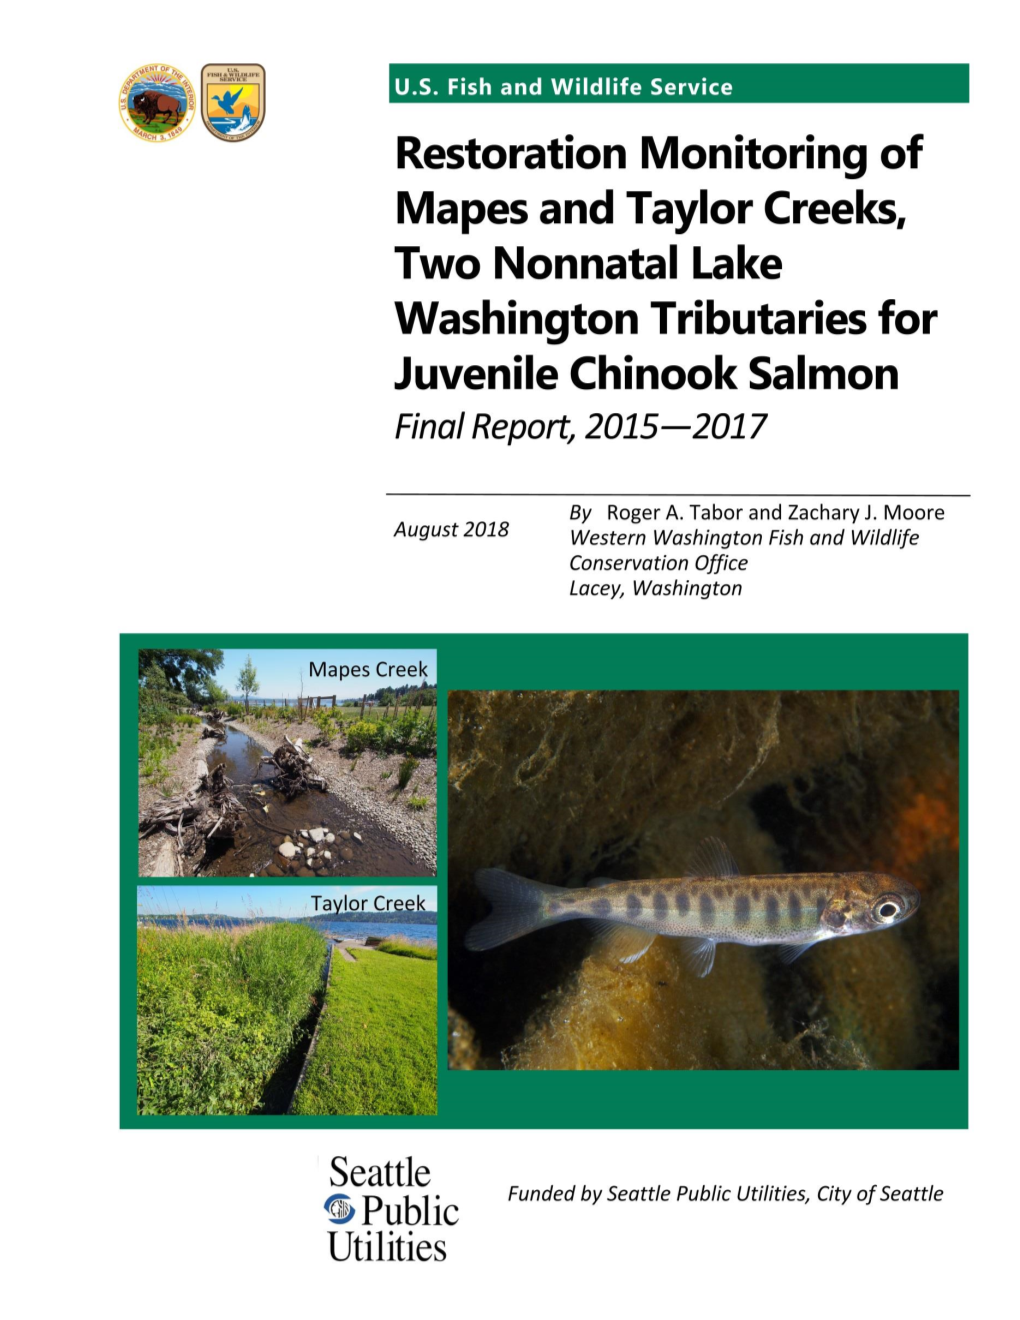 Restoration Monitoring of Mapes and Taylor Creeks, Two Nonnatal Lake Washington Tributaries for Juvenile Chinook Salmon Final Report, 2015-2017